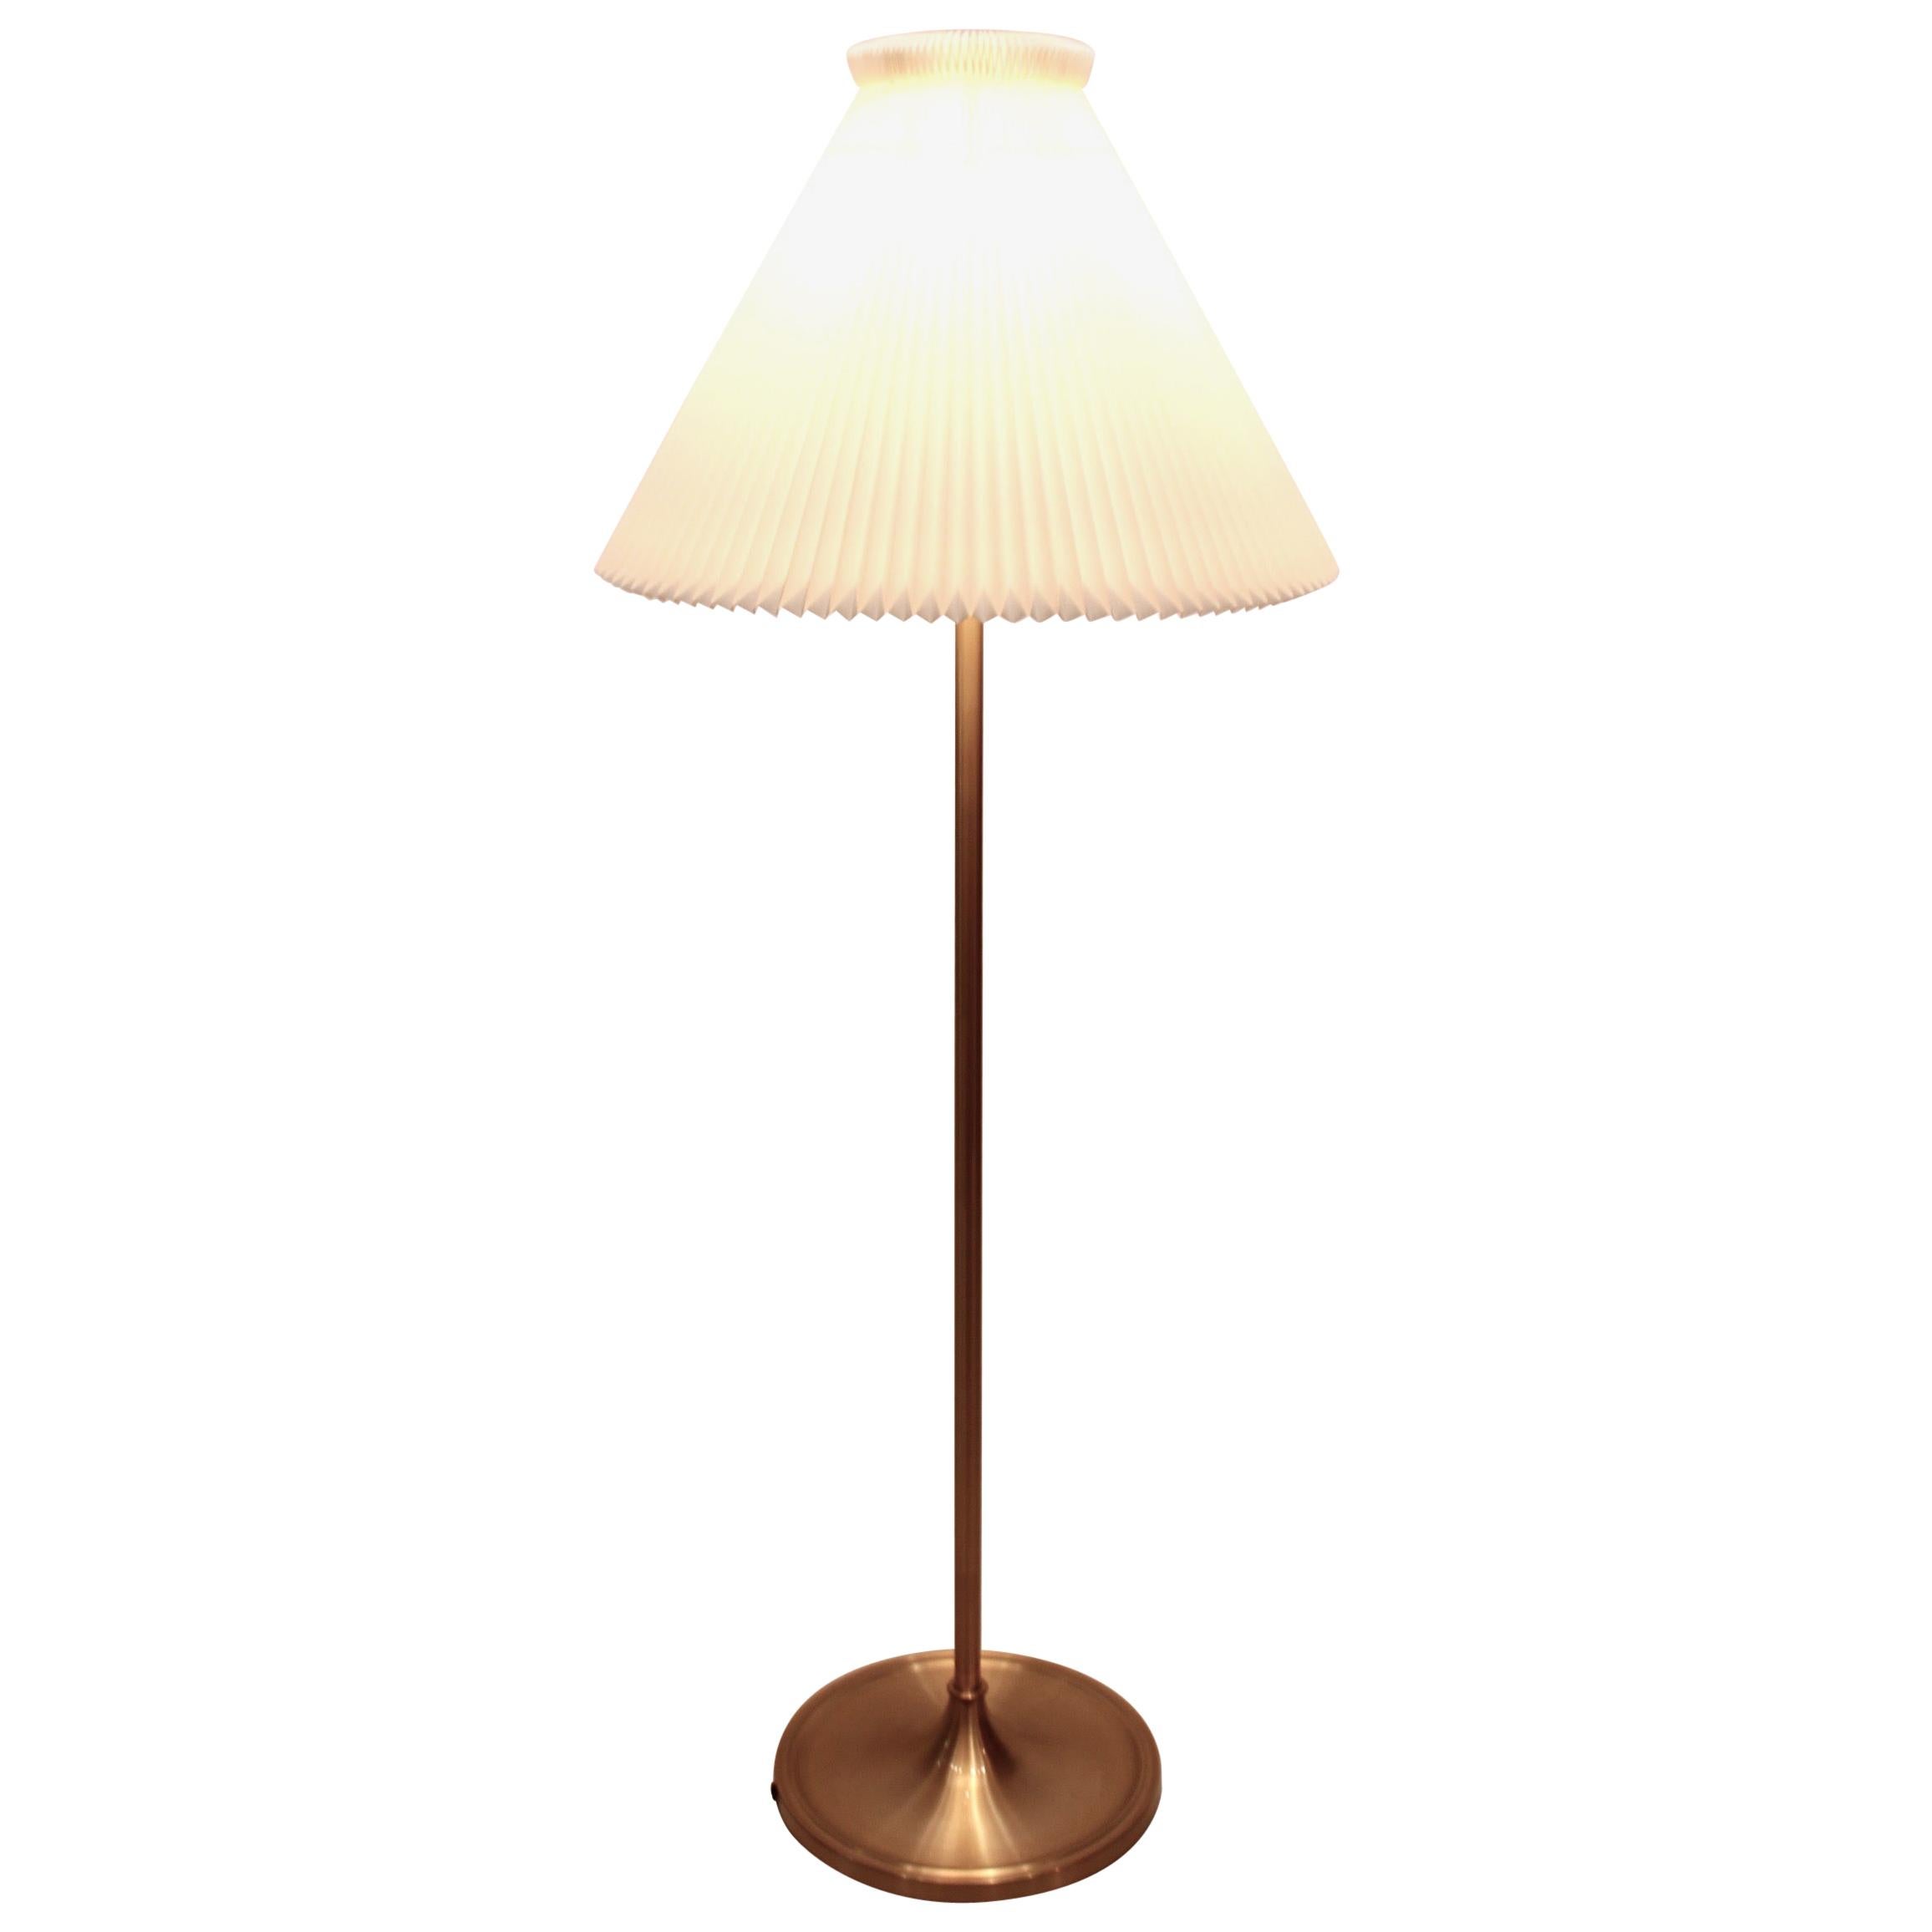 Floor Lamp, Model 339, Designed by Aage Petersen for Le Klint. 